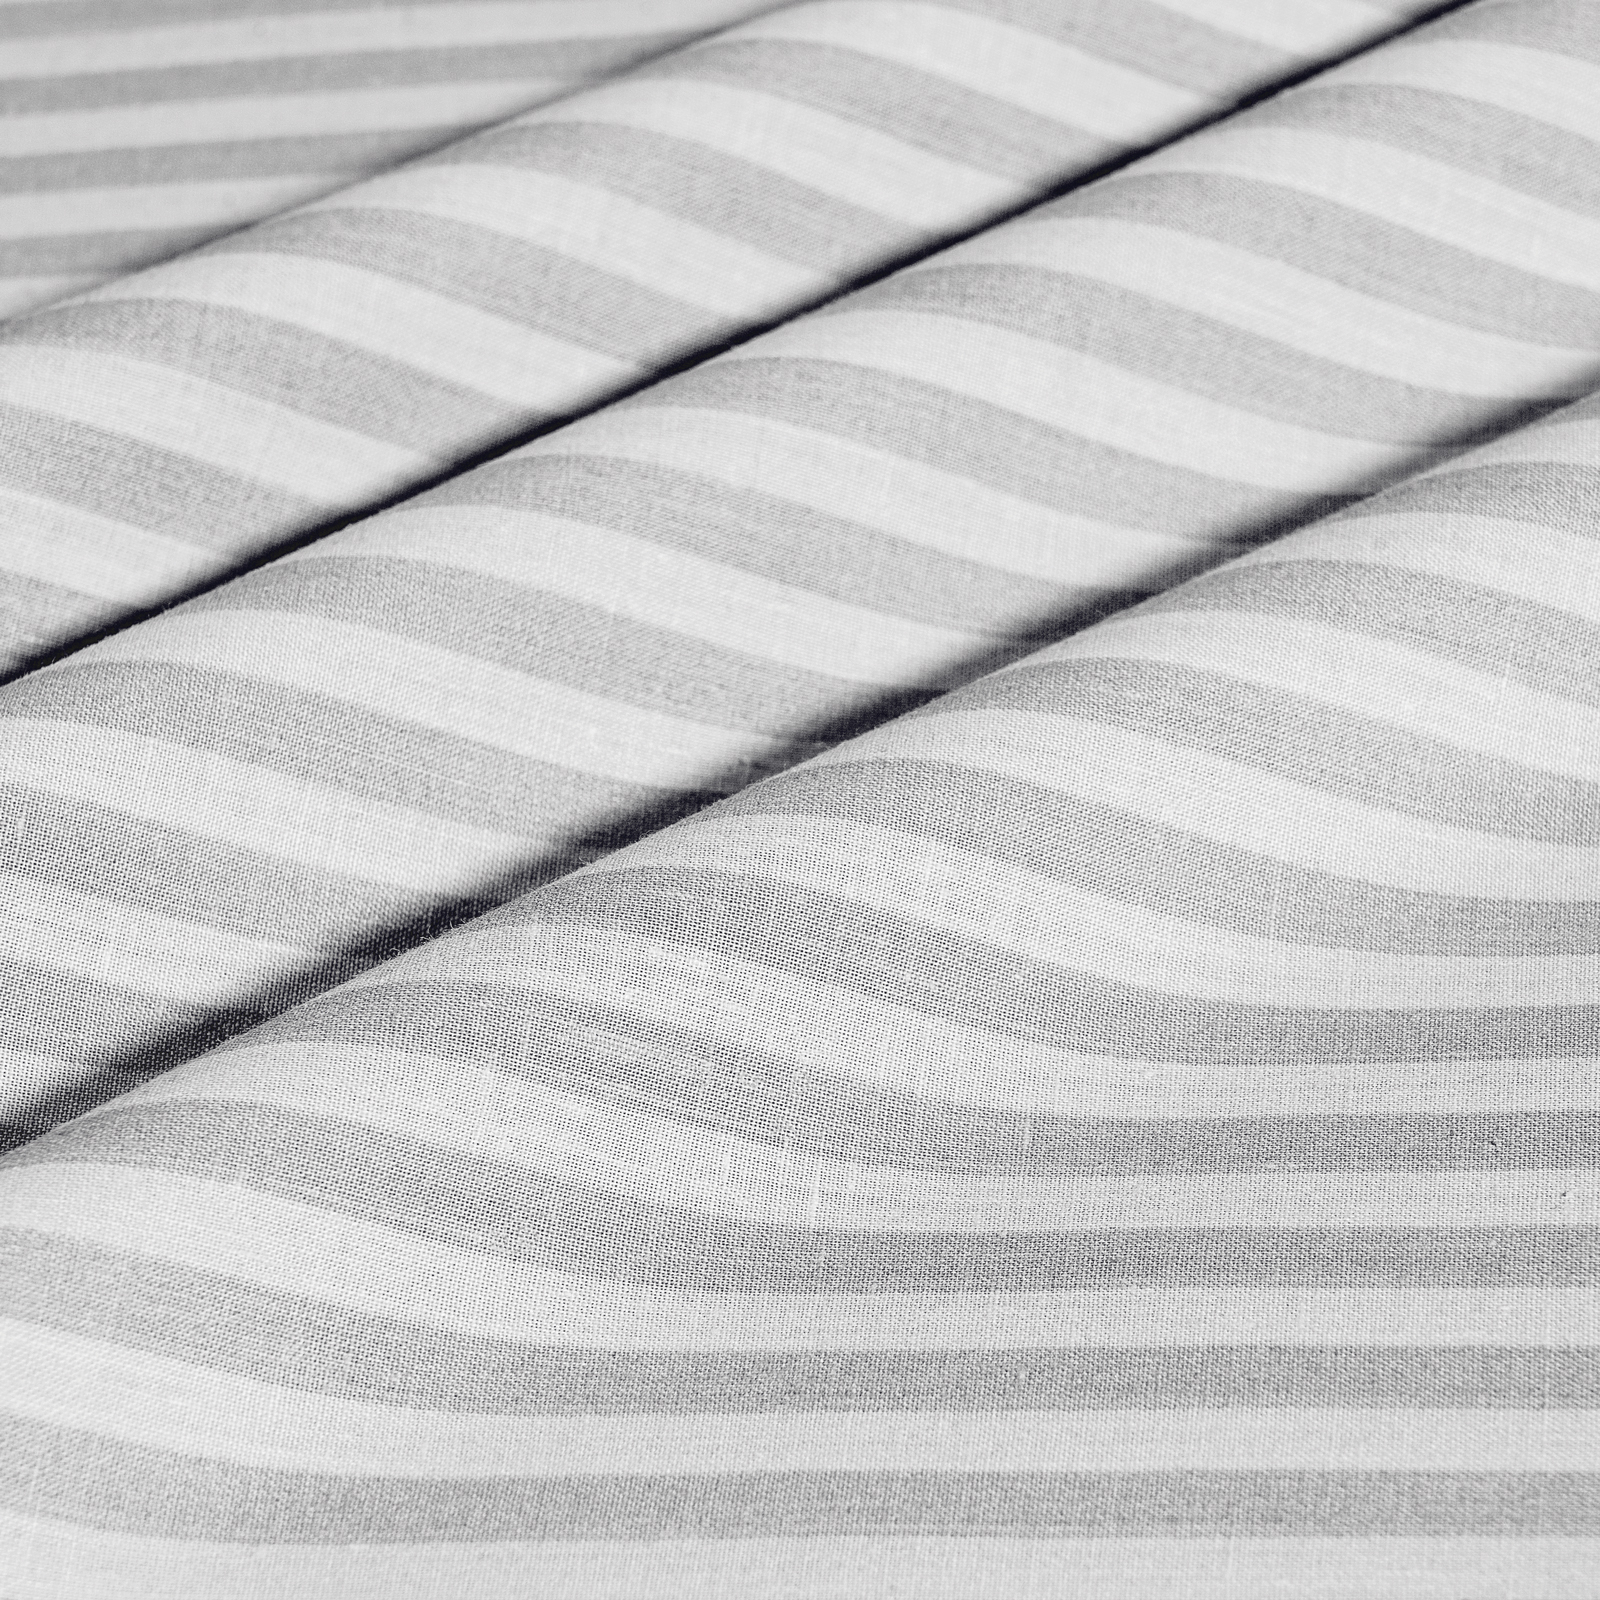 Простыня на резинке Medsleep Линдау светло-серый 180х200х25 см - фото 2